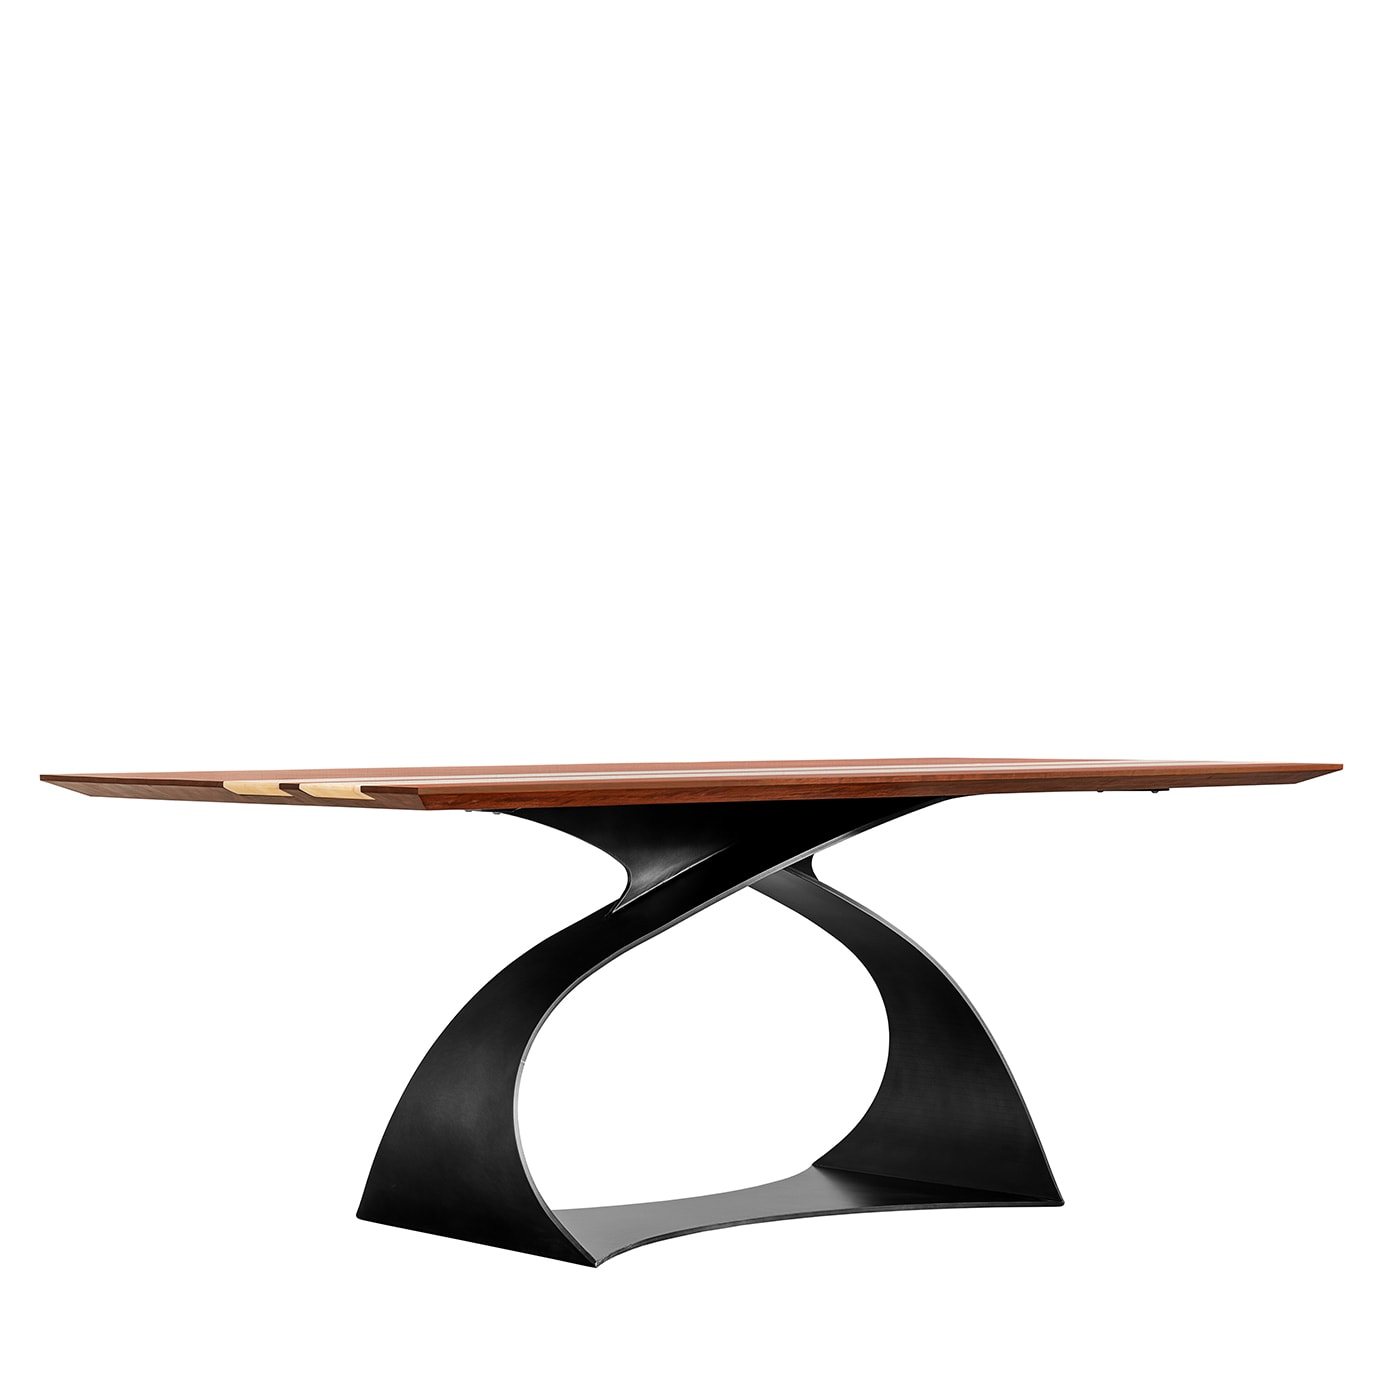 Luxury Hug Table - Slow Wood by Gianni Cantarutti